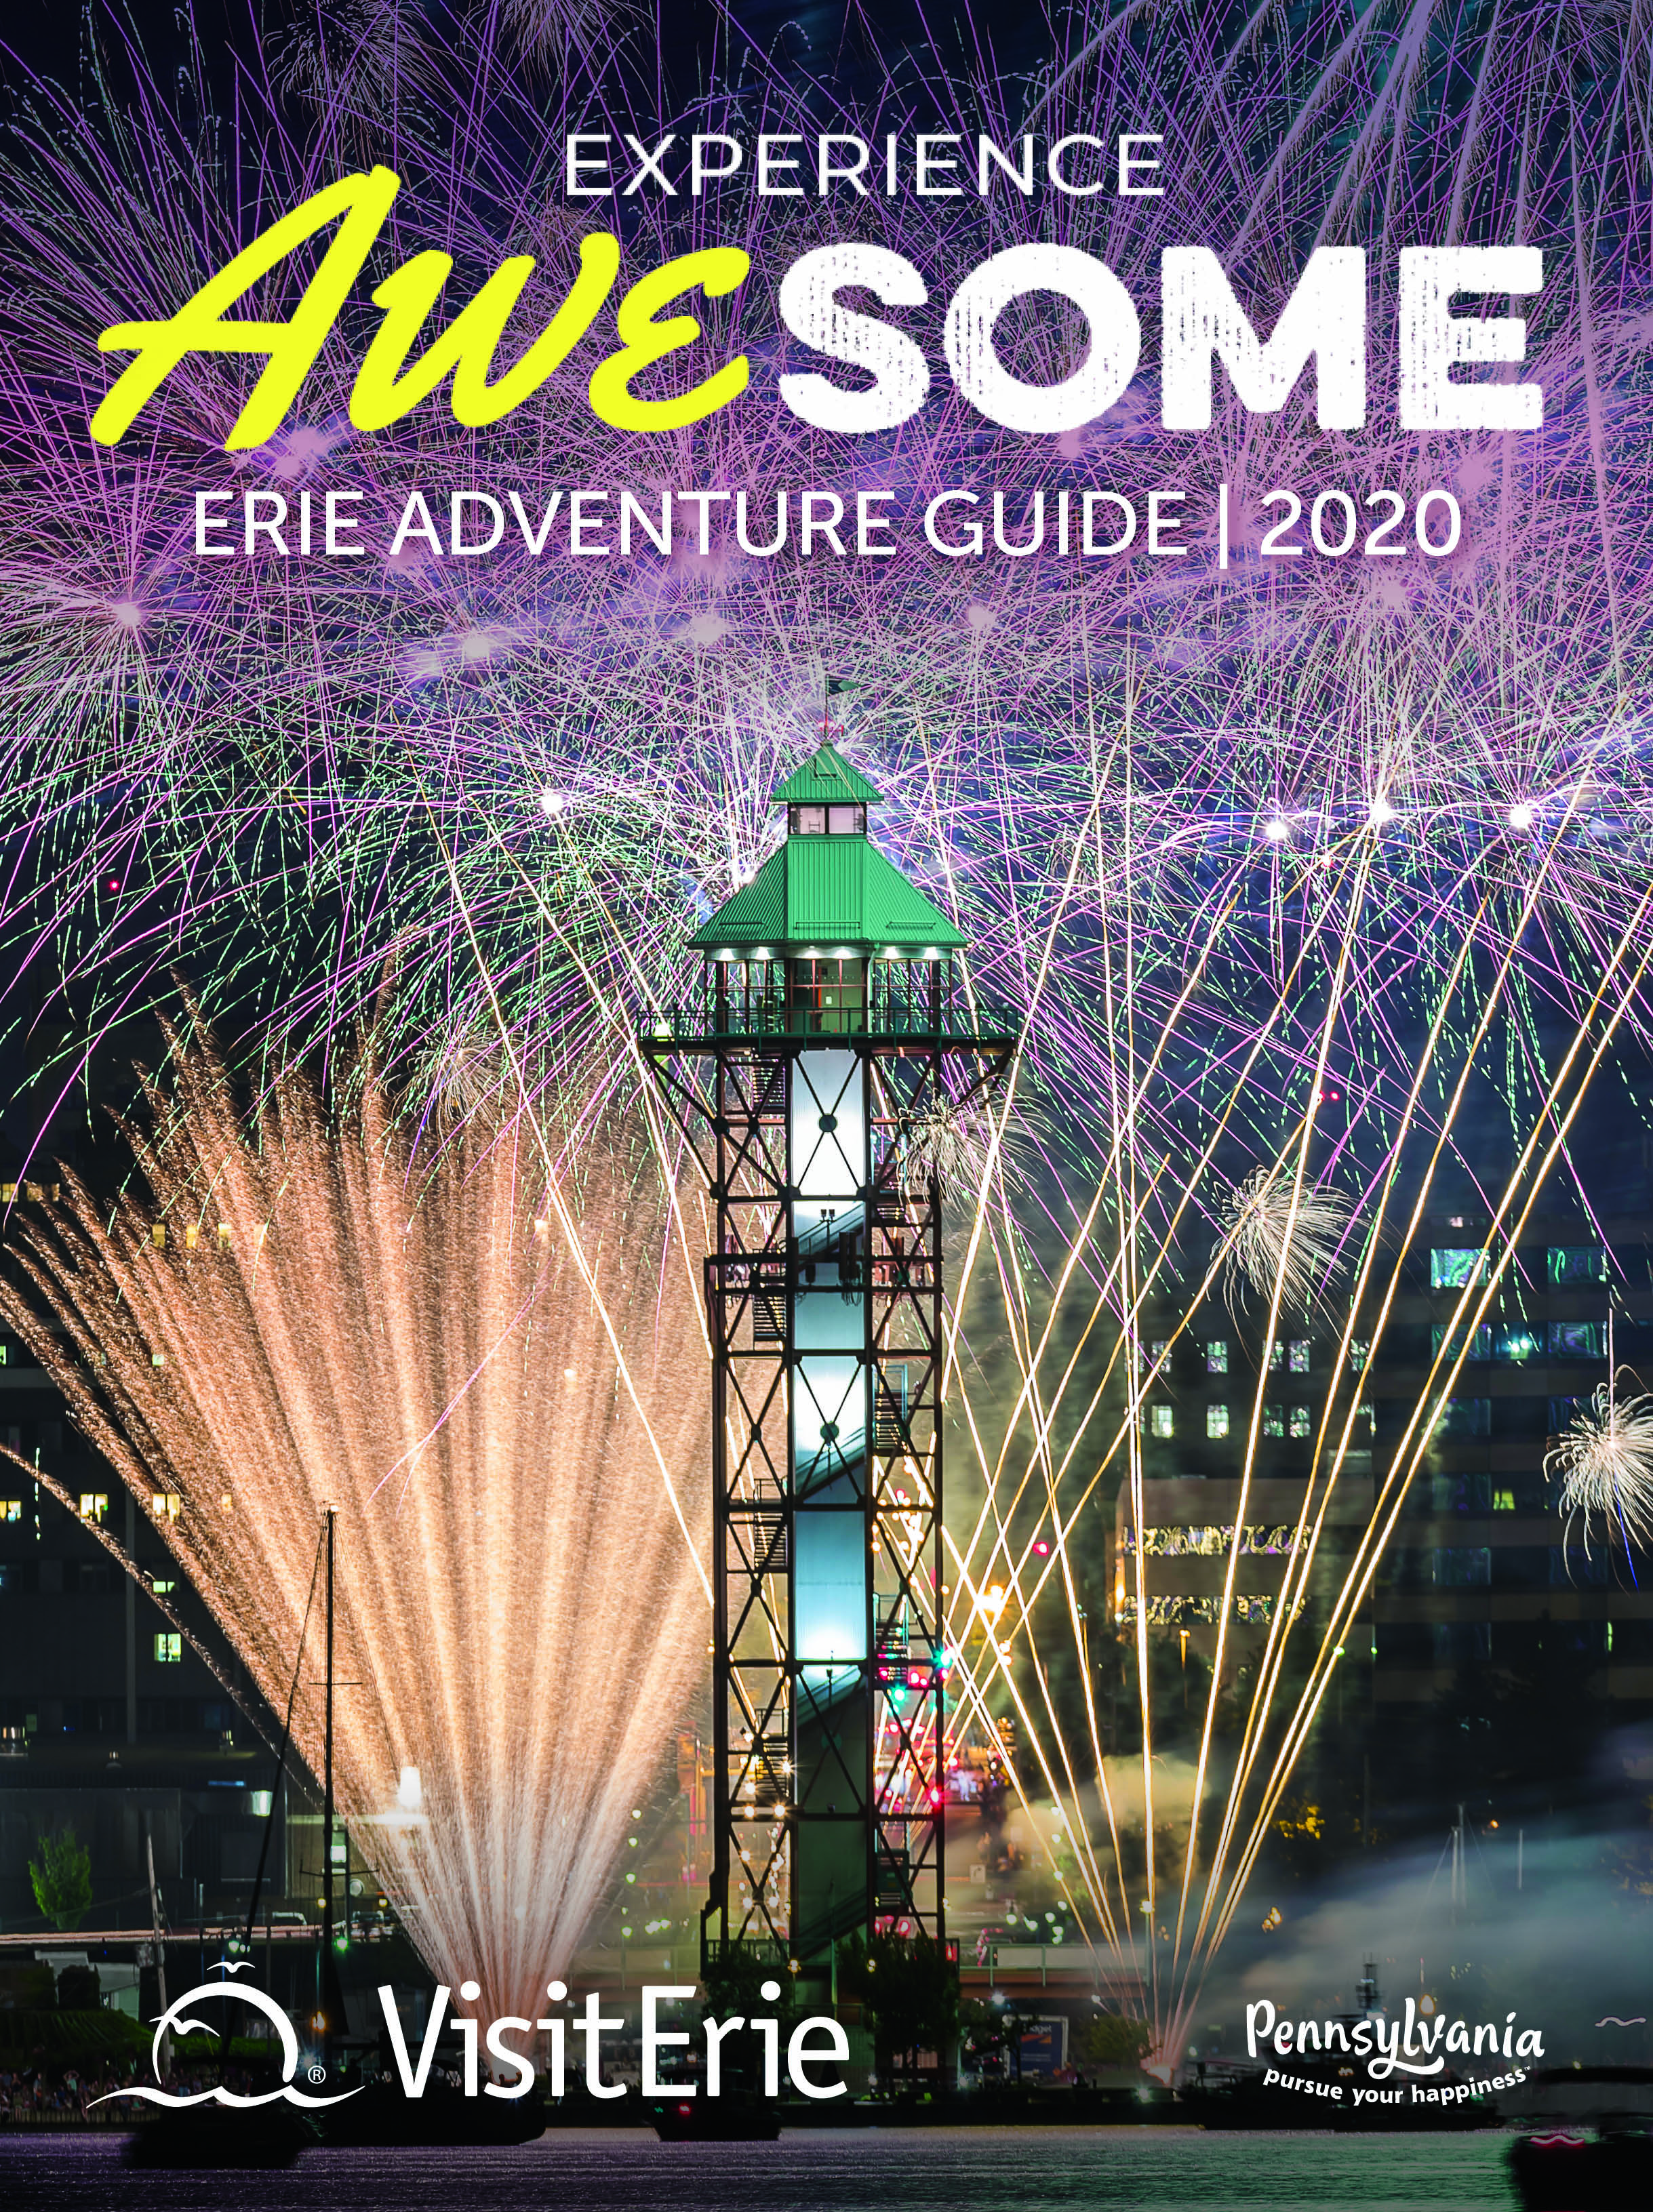 2020 Adventure Guide Cover FINAL v2